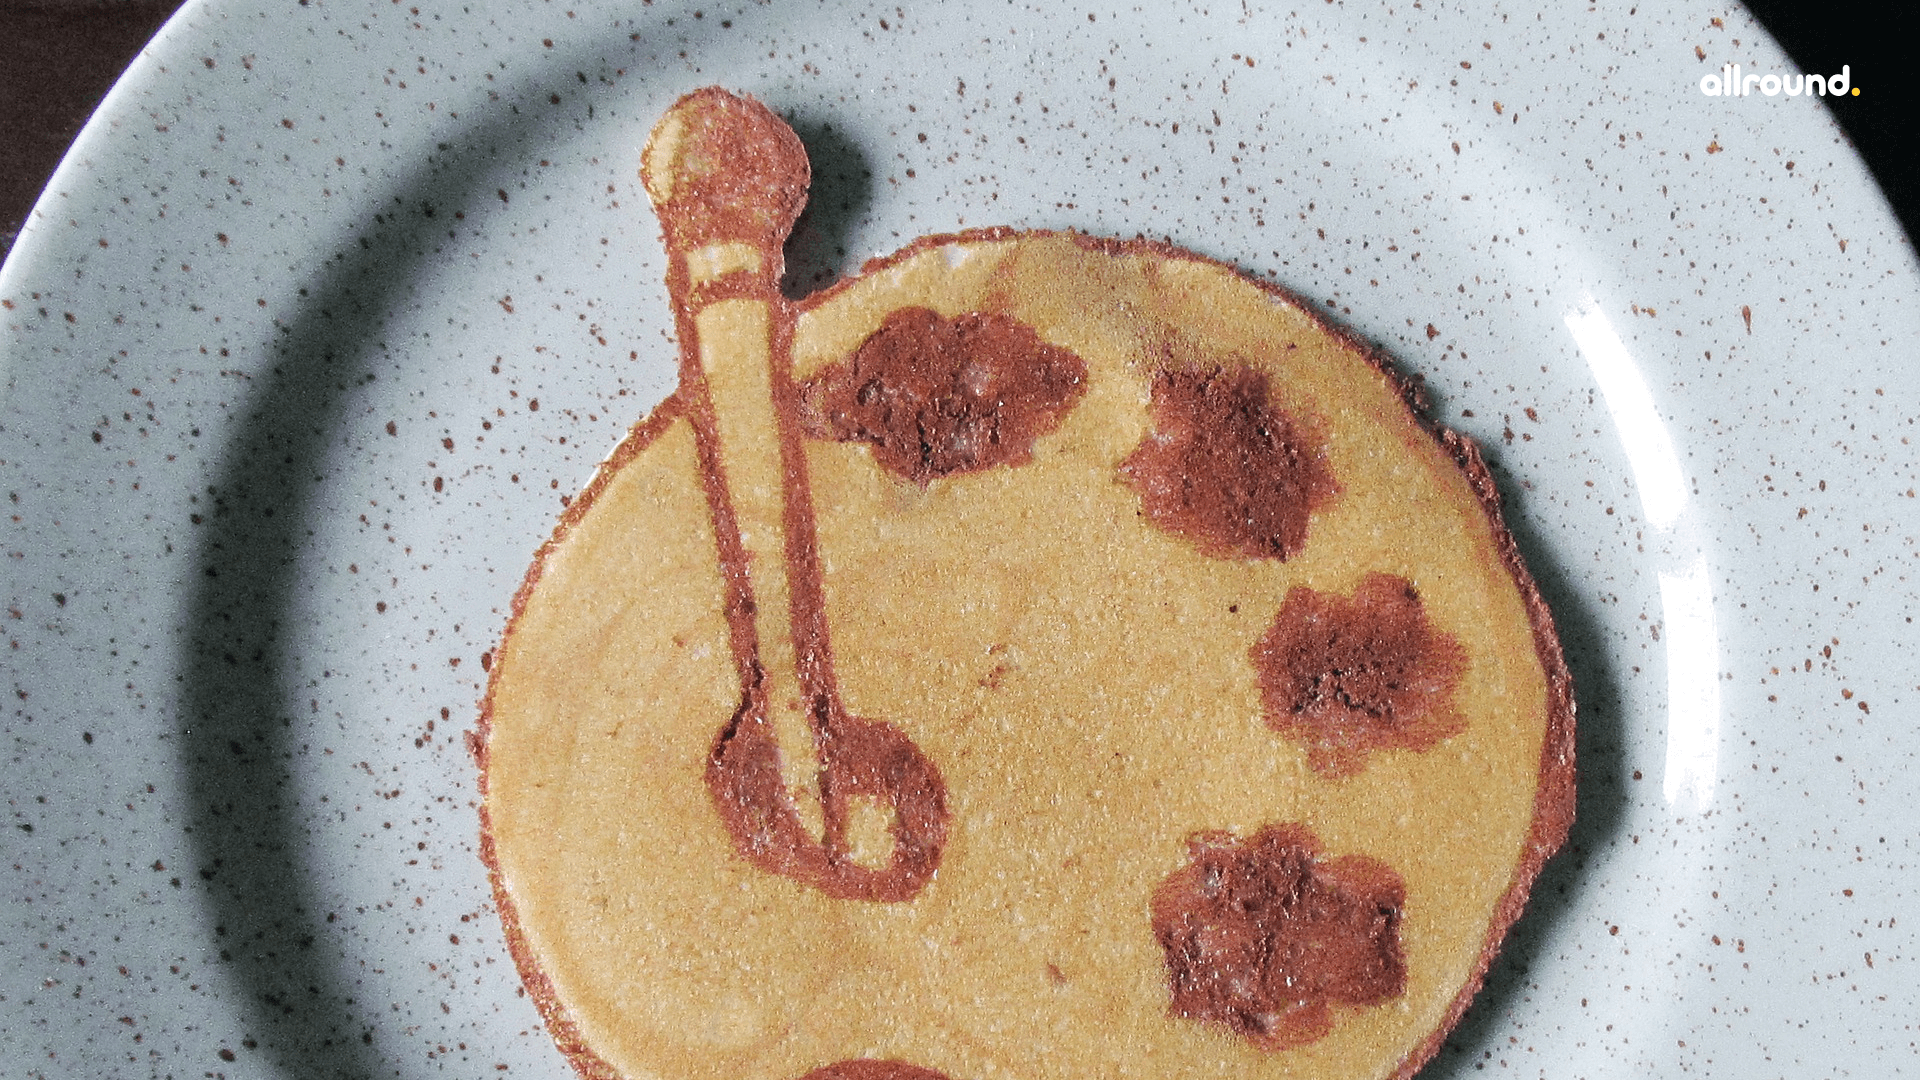 Homeschooling with Pancake Art